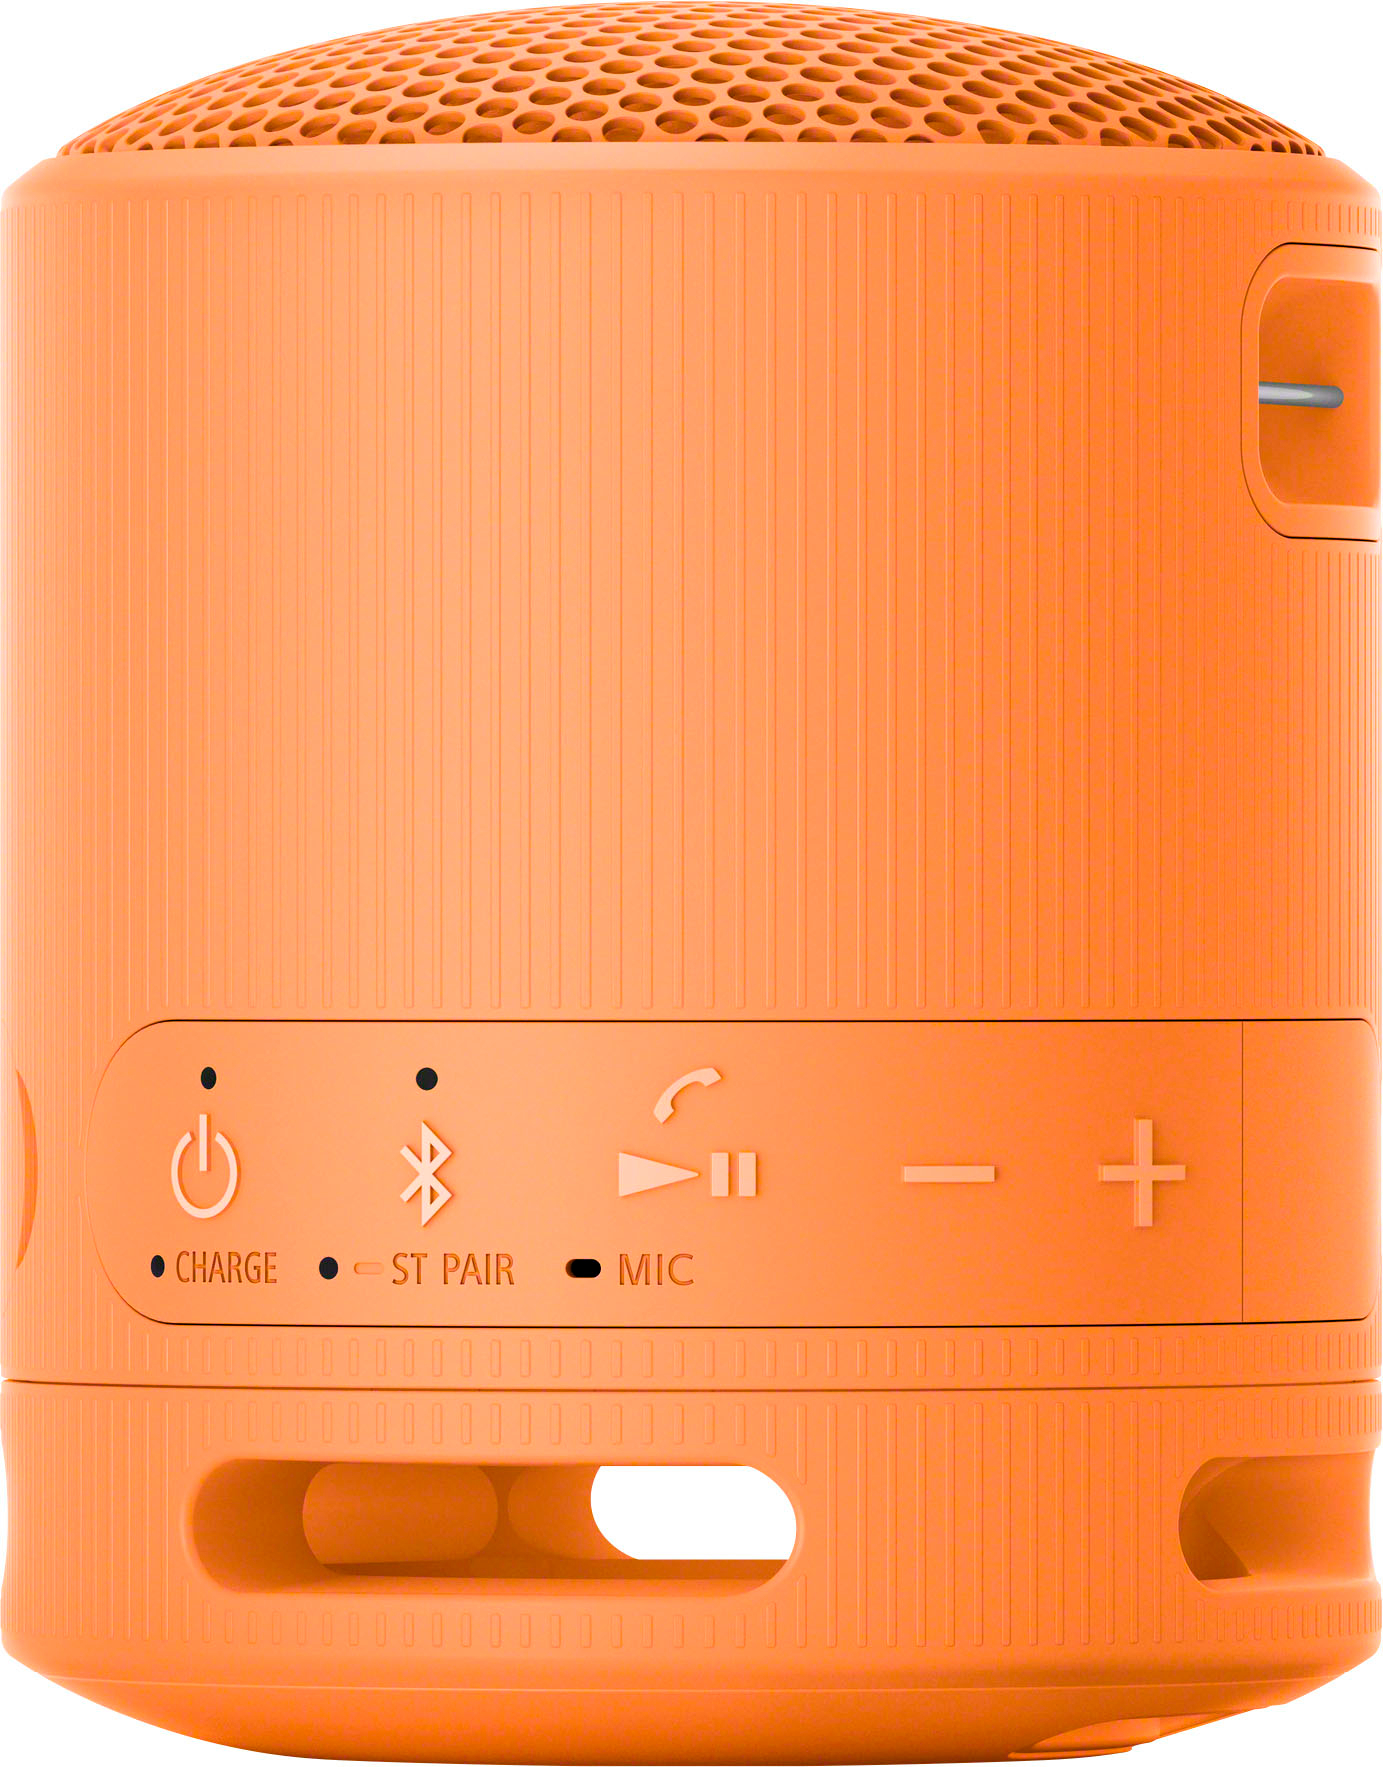 Sony XB100 Compact Orange SRSXB100/D Bluetooth - Best Speaker Buy